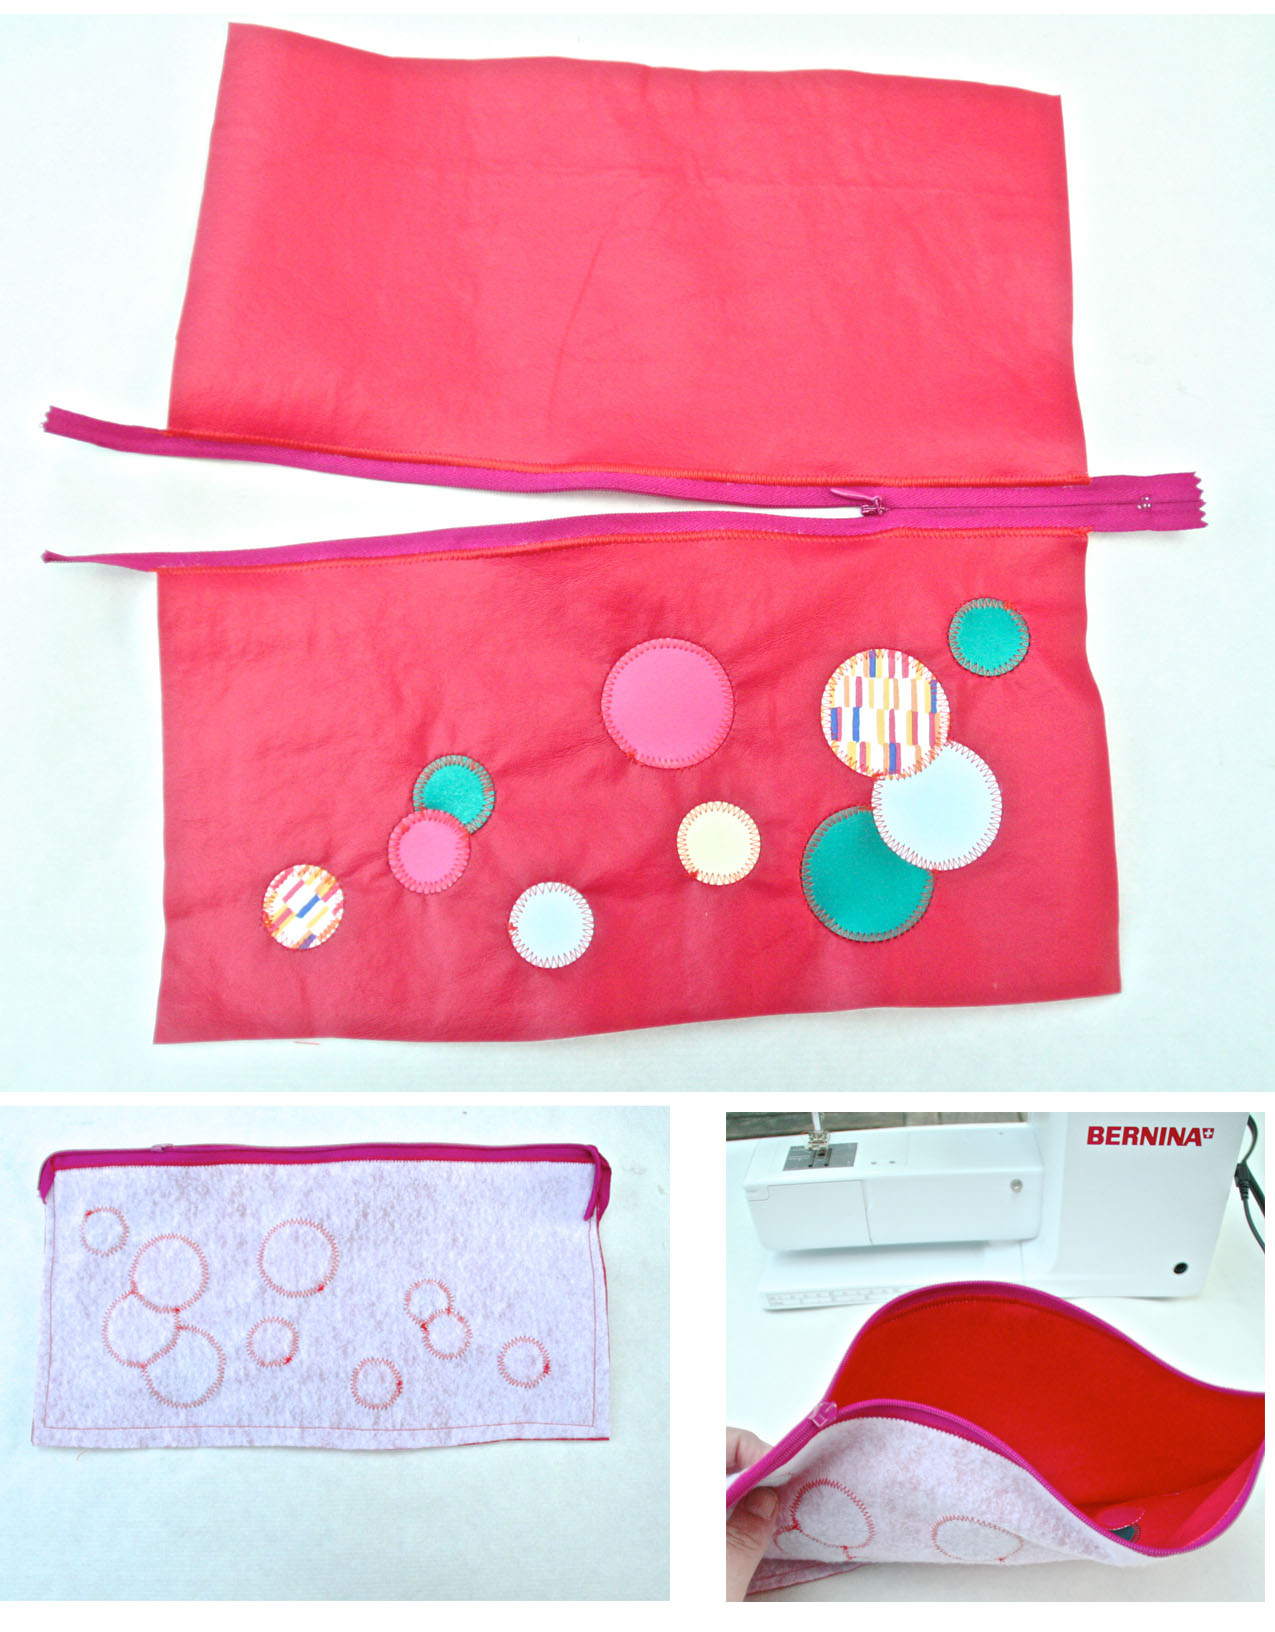 5-how-to-sew-make-craft-diy-vinyl-cosmetic-make-up-bag-sizzix-bernina